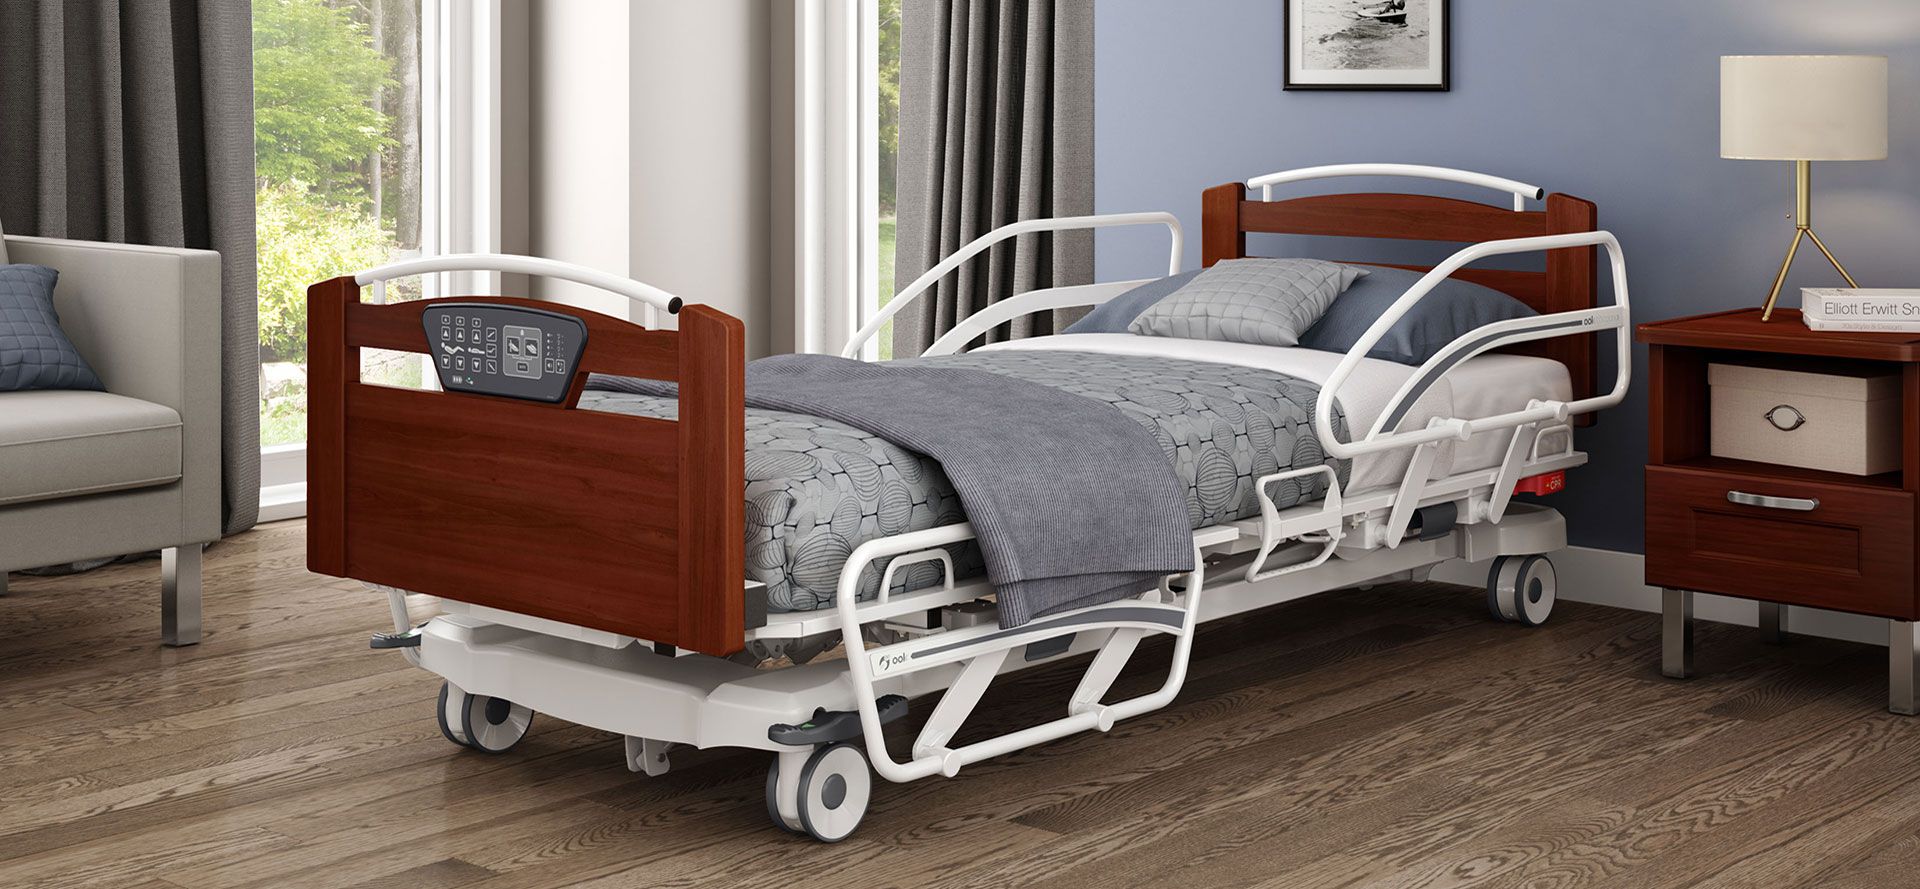 Best Hospital Bed Mattresses.